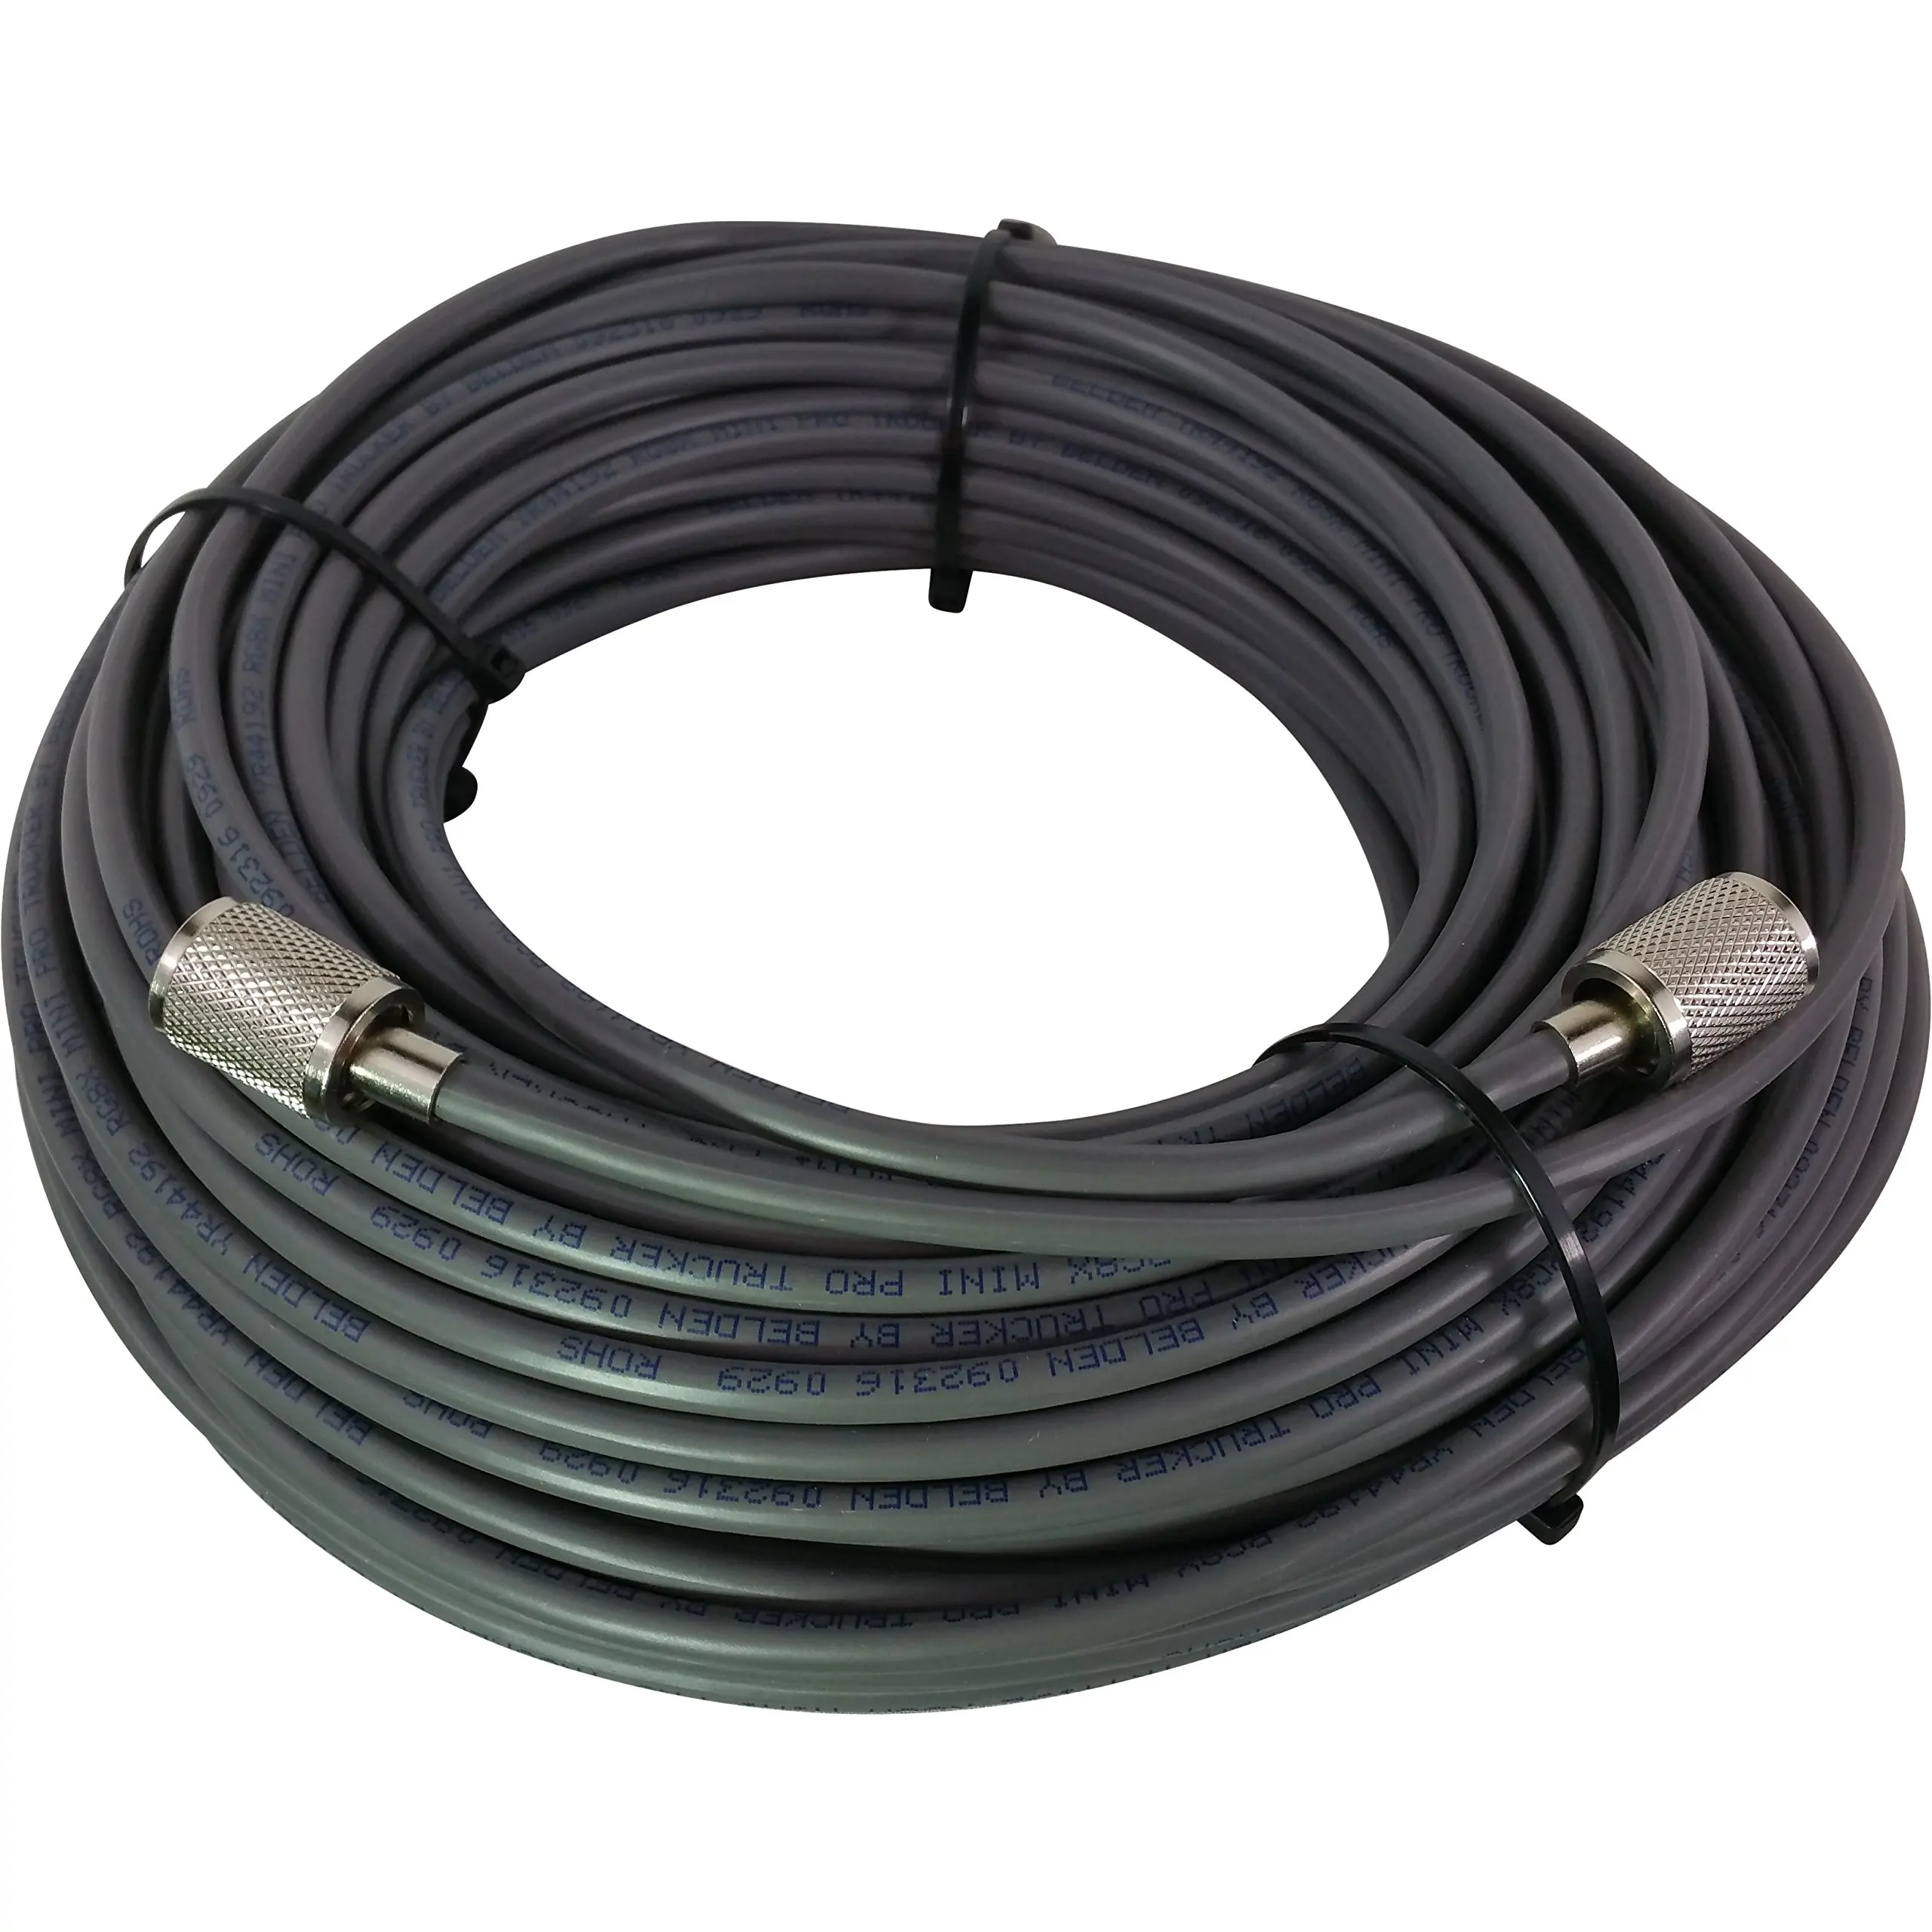 Shielded cable. RG 8x кабель. Разъем для кабеля Belden RG-11. RG-8x. Coax Cable.